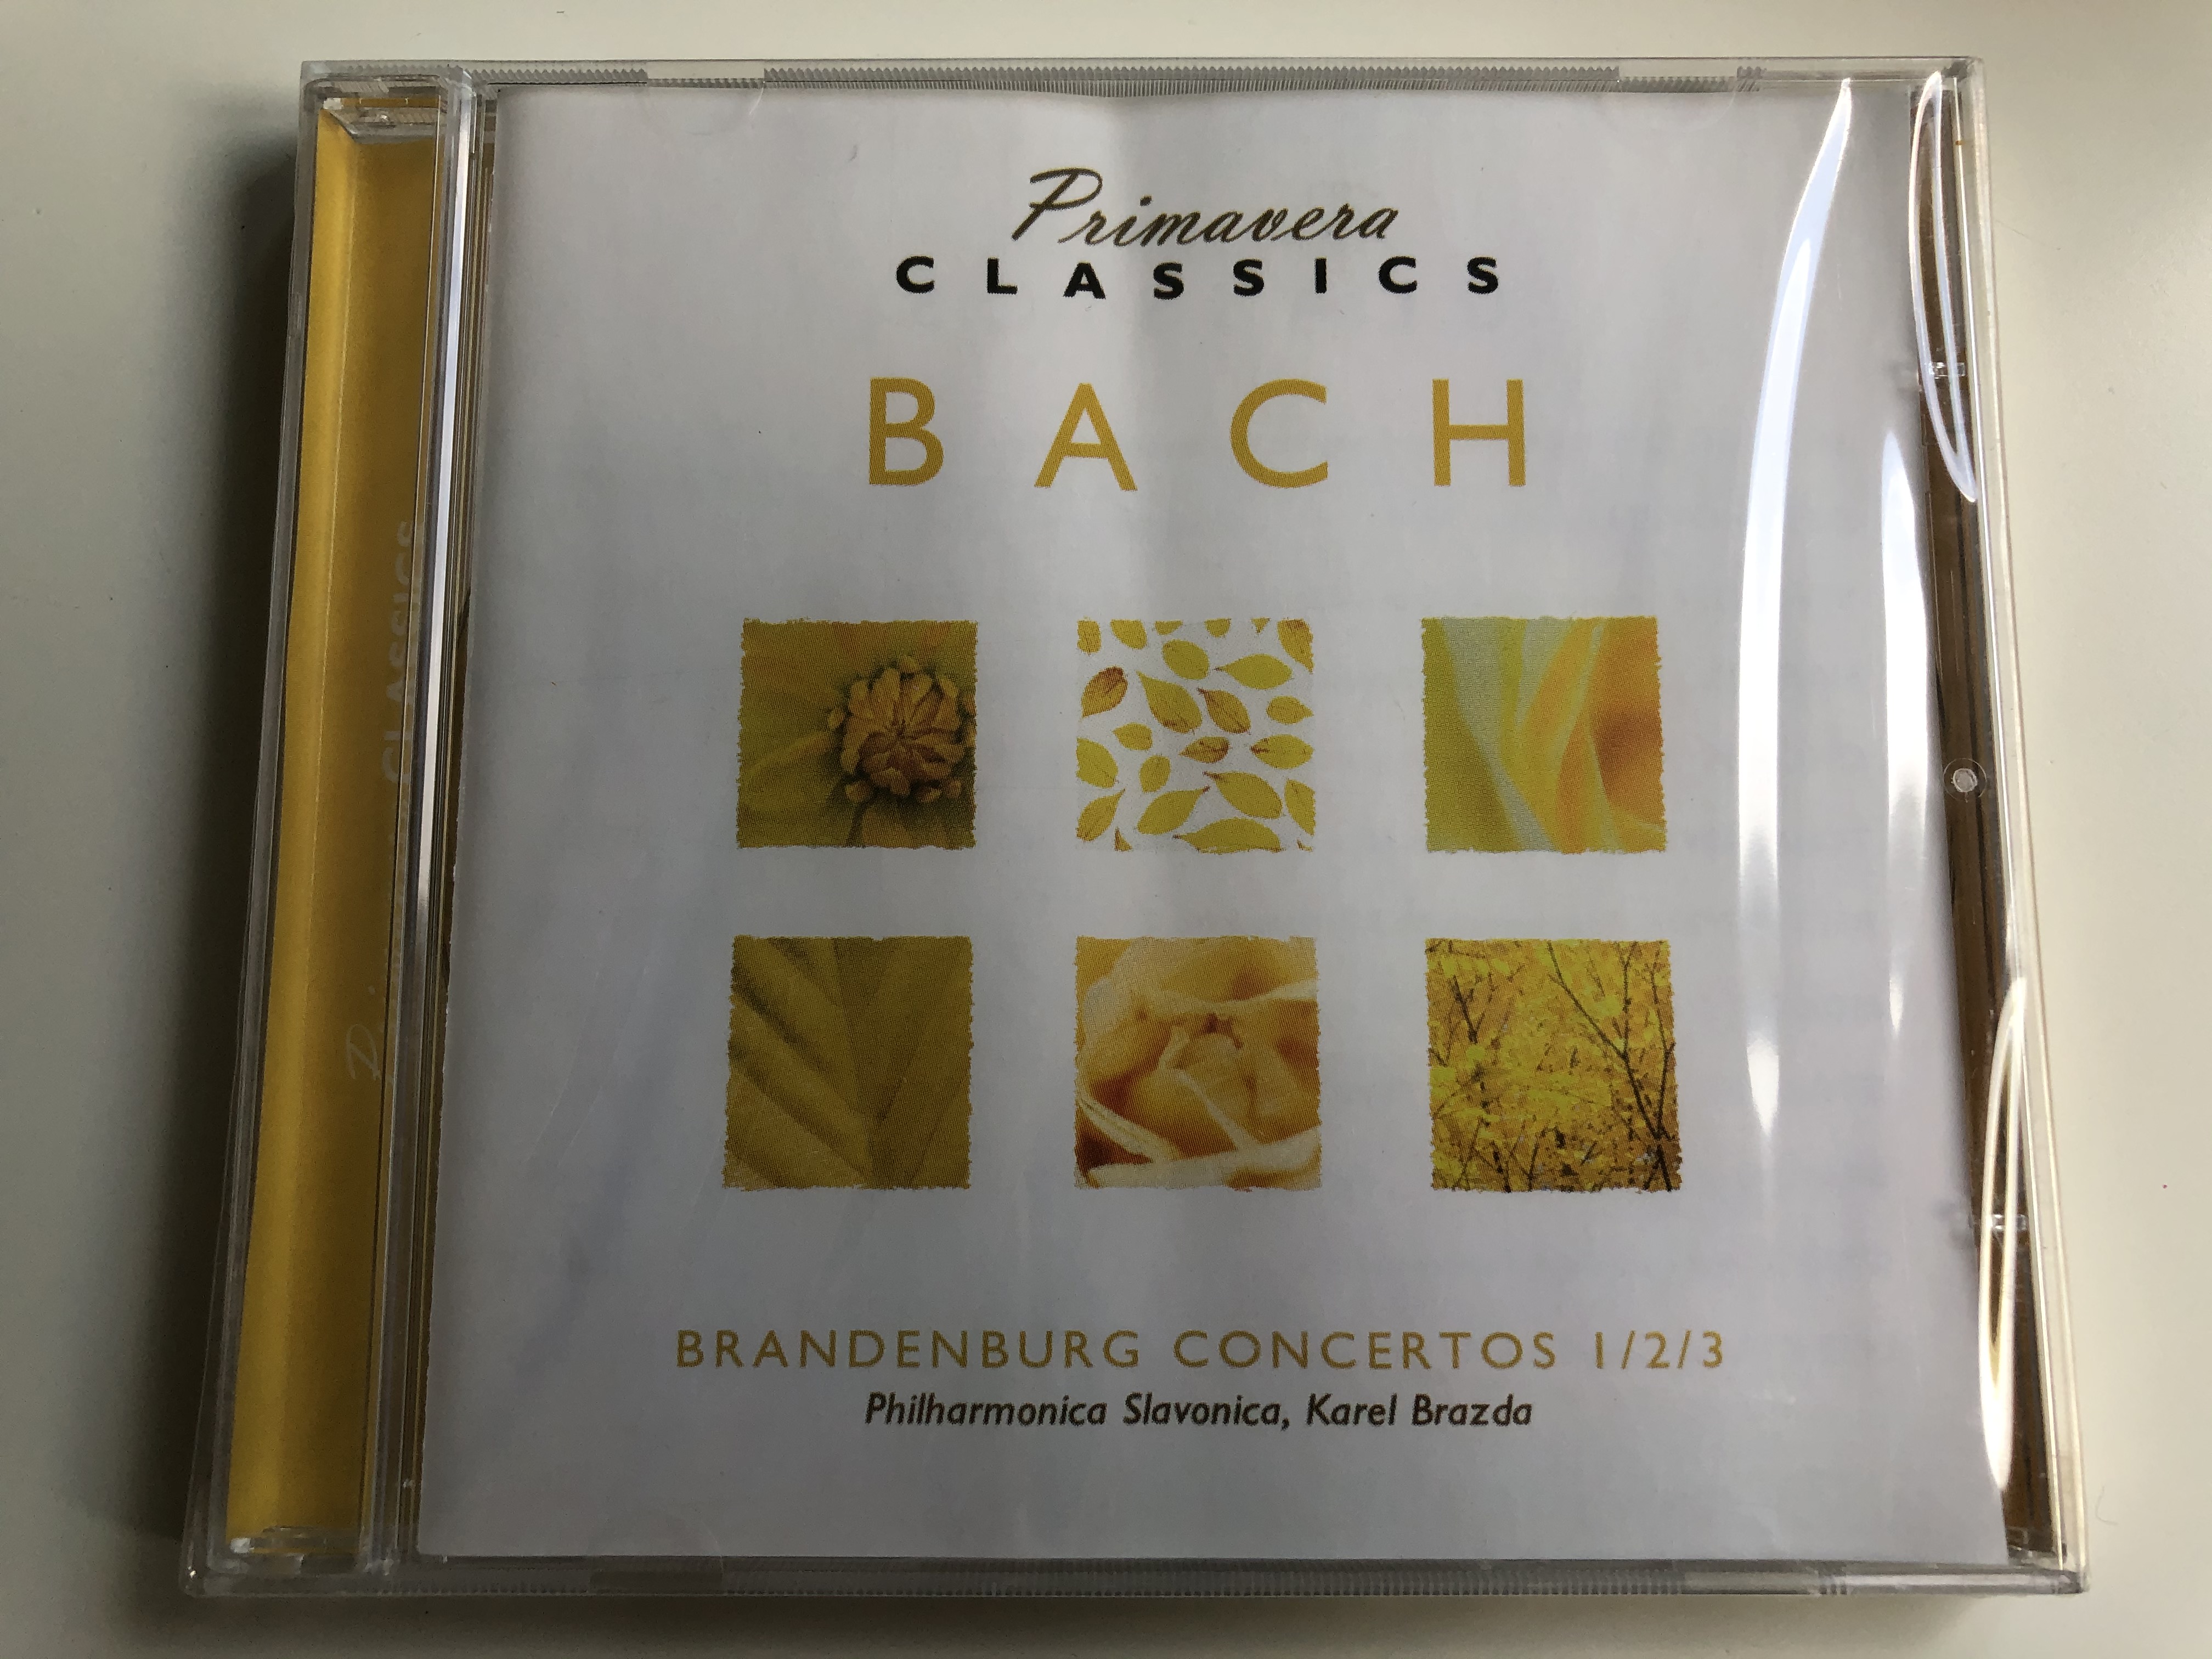 primavera-classics-bach-brandenburg-concertos-123-philharmonica-slavonica-karel-brazda-luxury-multimedia-audio-cd-2006-3516172-1-.jpg